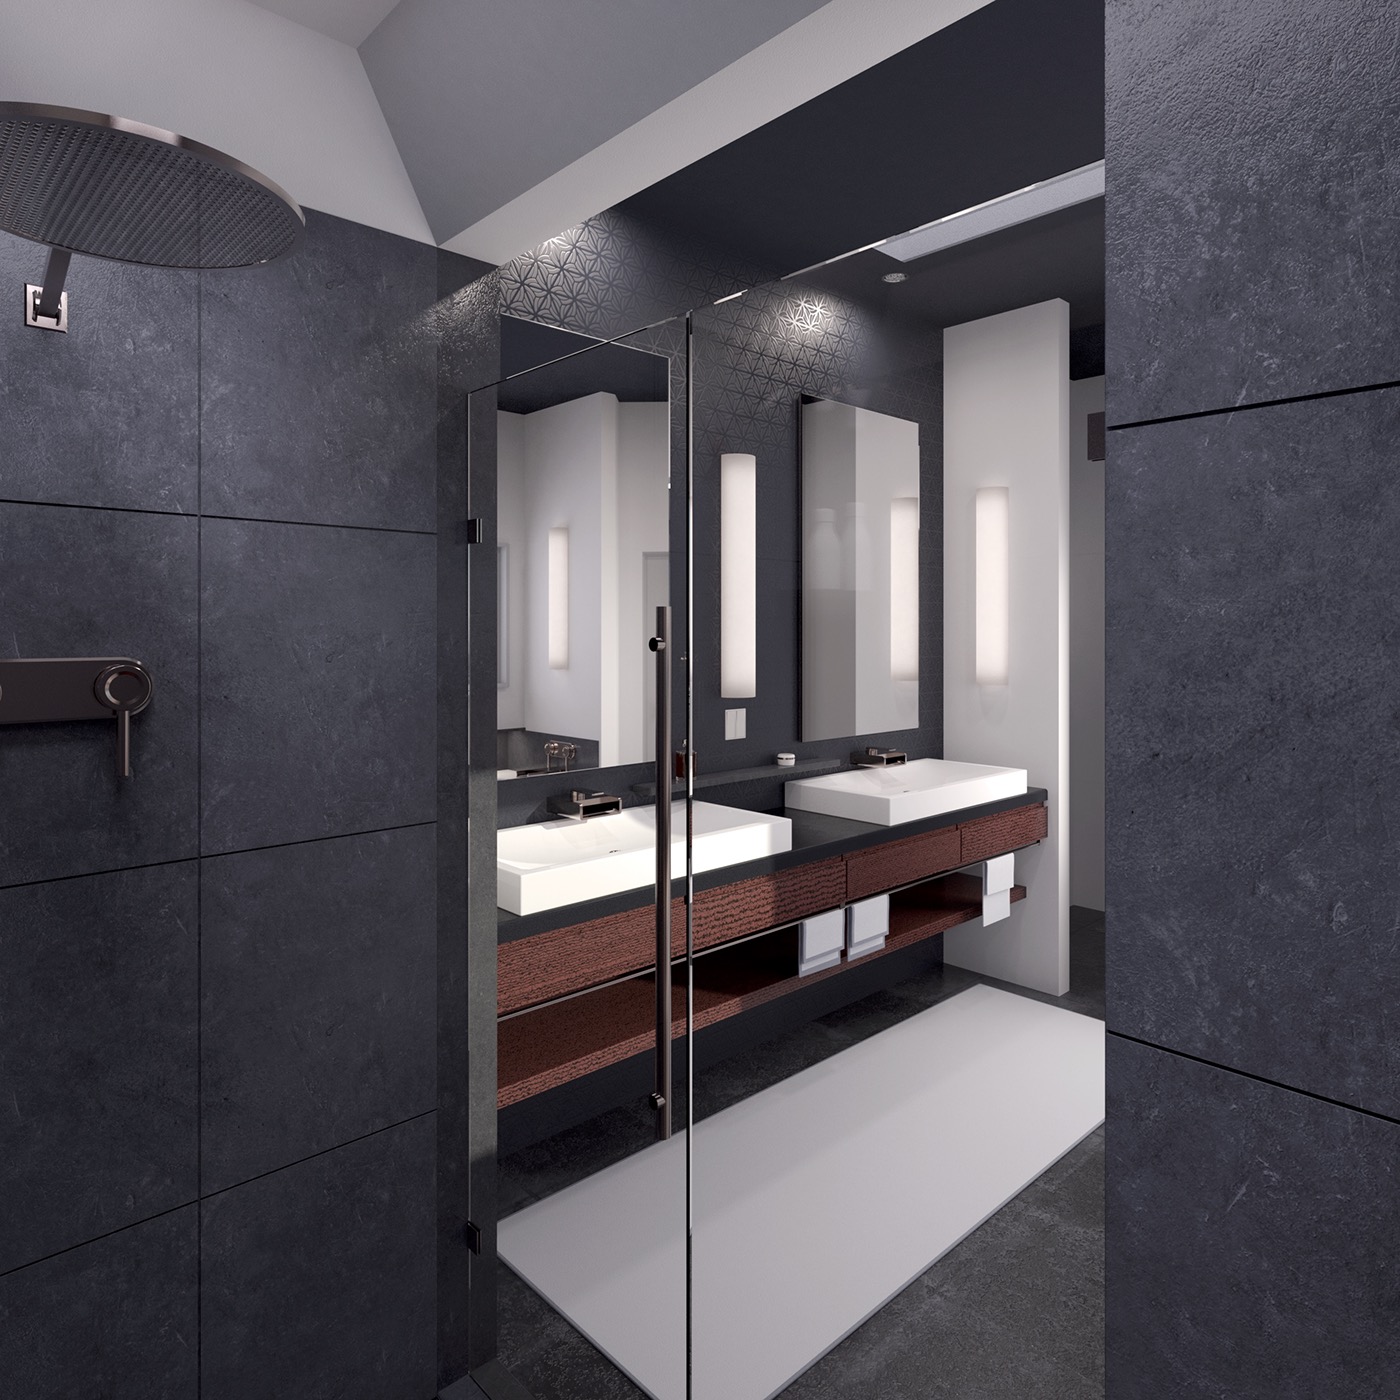 Interior bathroom rendering SketchUP keyshot archvis contemporary design